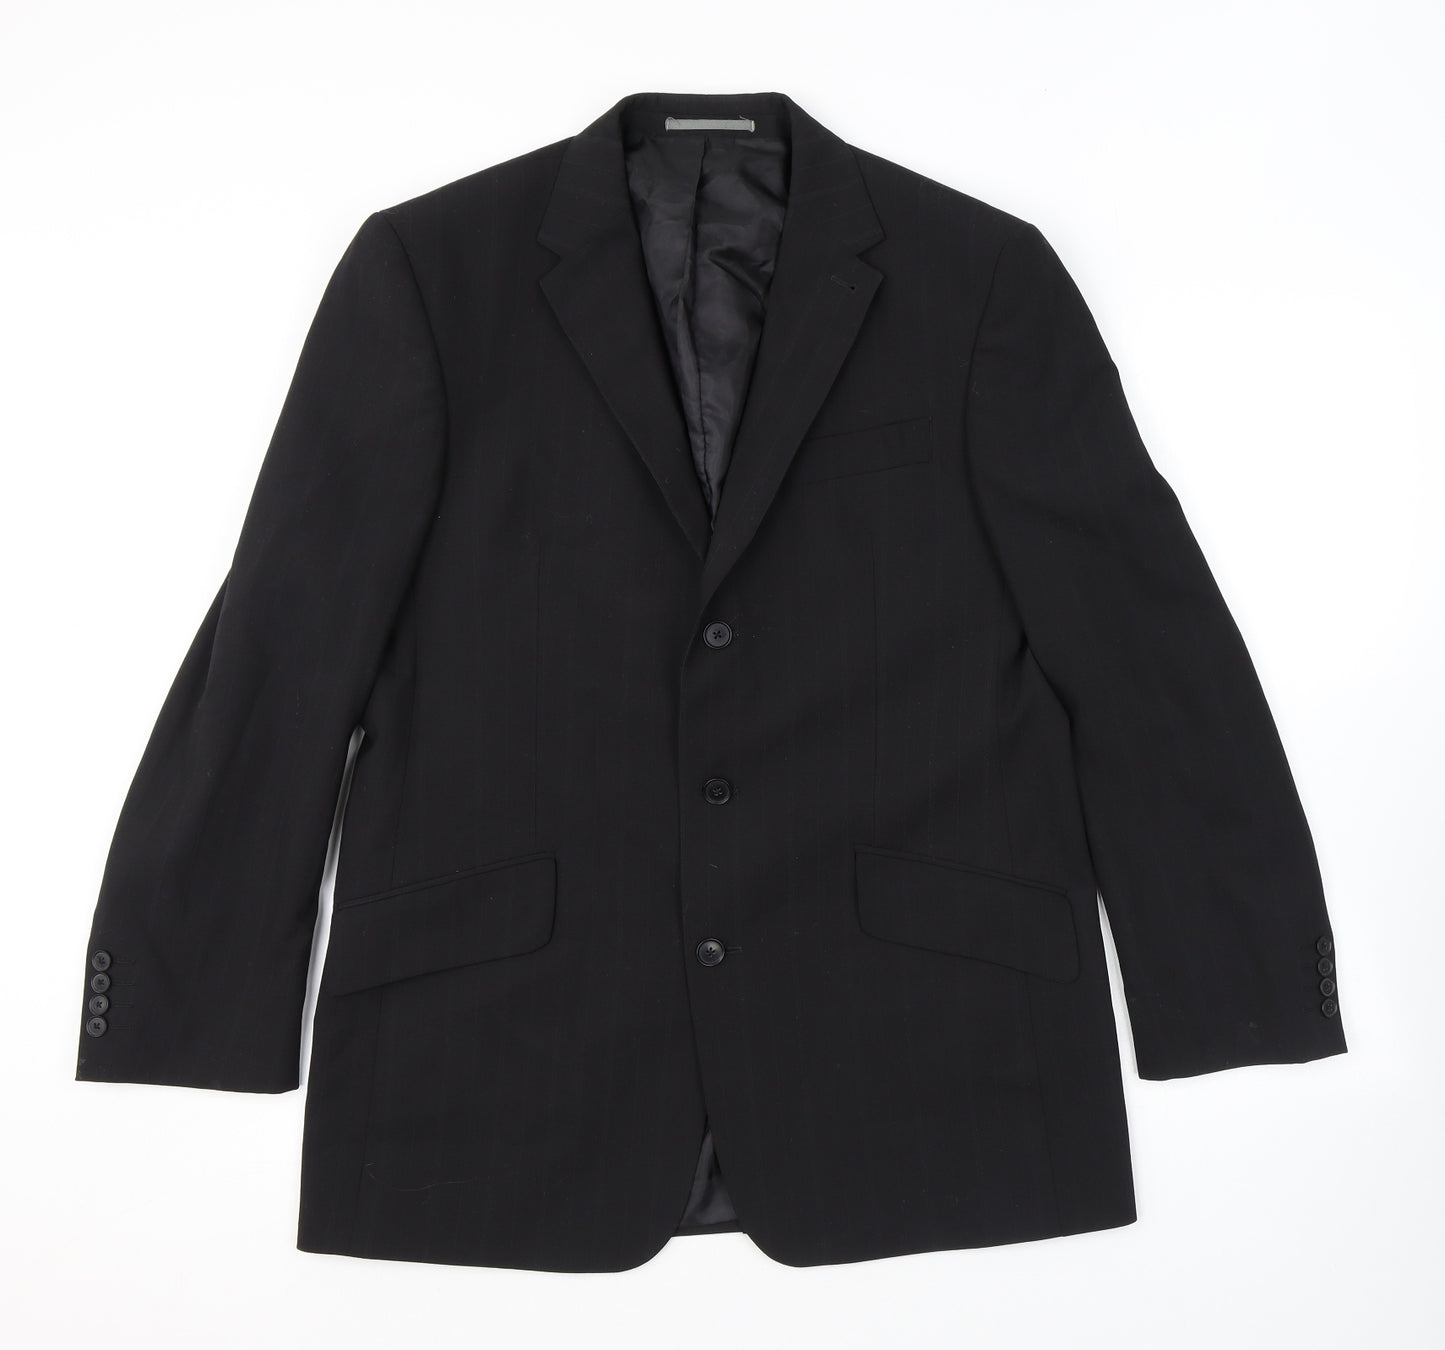 NEXT Mens Black Polyester Jacket Suit Jacket Size 40 Regular